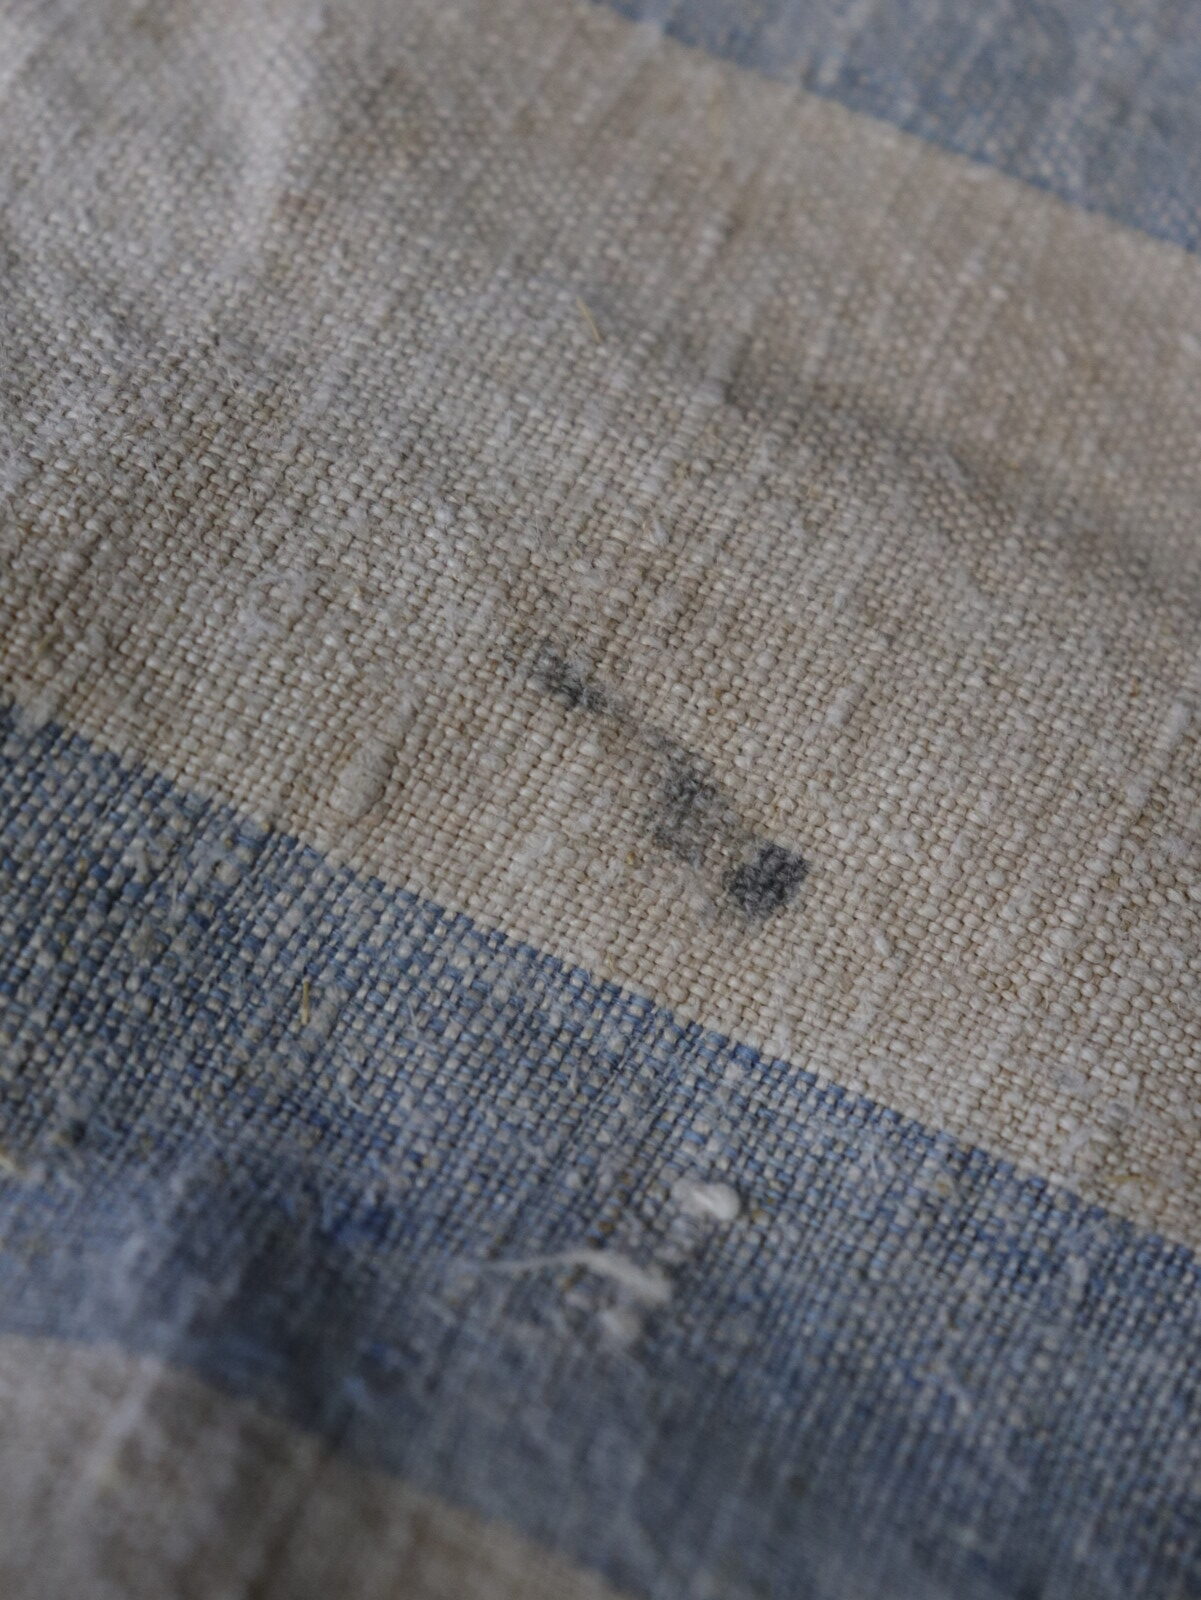 1960's,vintage linen fabric,grain sack,Germany,BROWN.remake,cushion